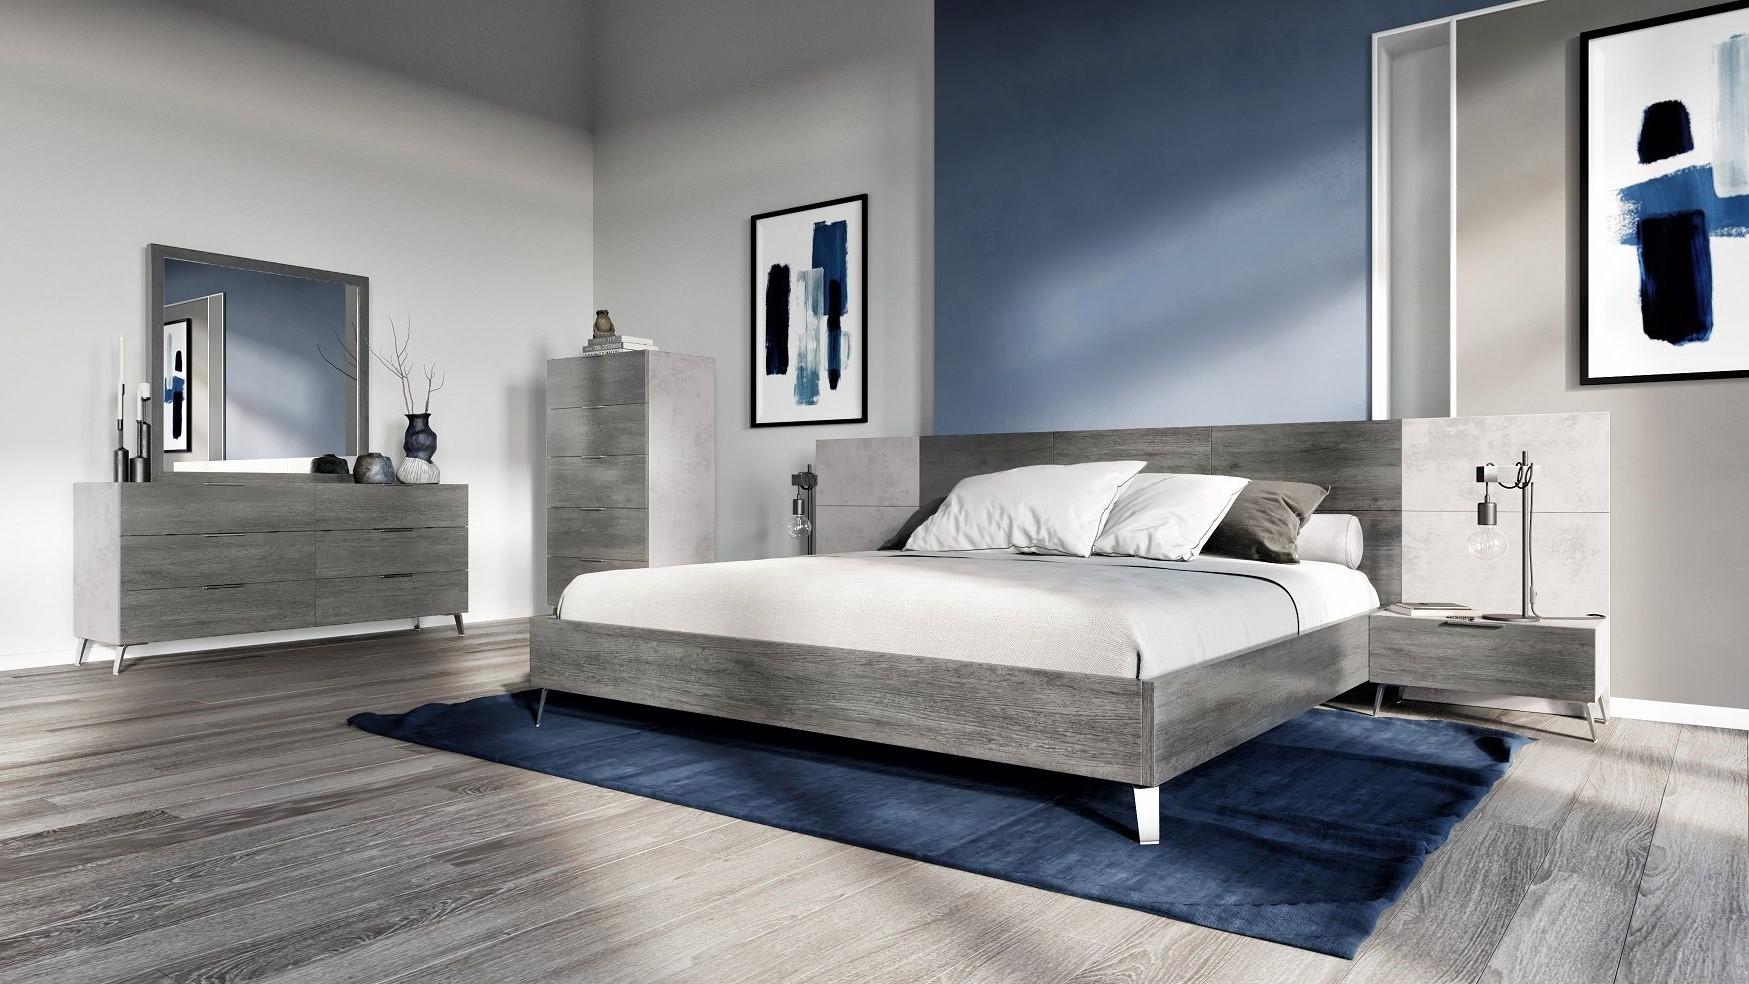 

    
VGACBRONX-SET-K-6pcs Faux Concrete & Grey Bed King Panel Bedroom Set 6Pcs by VIG Nova Domus Bronx
